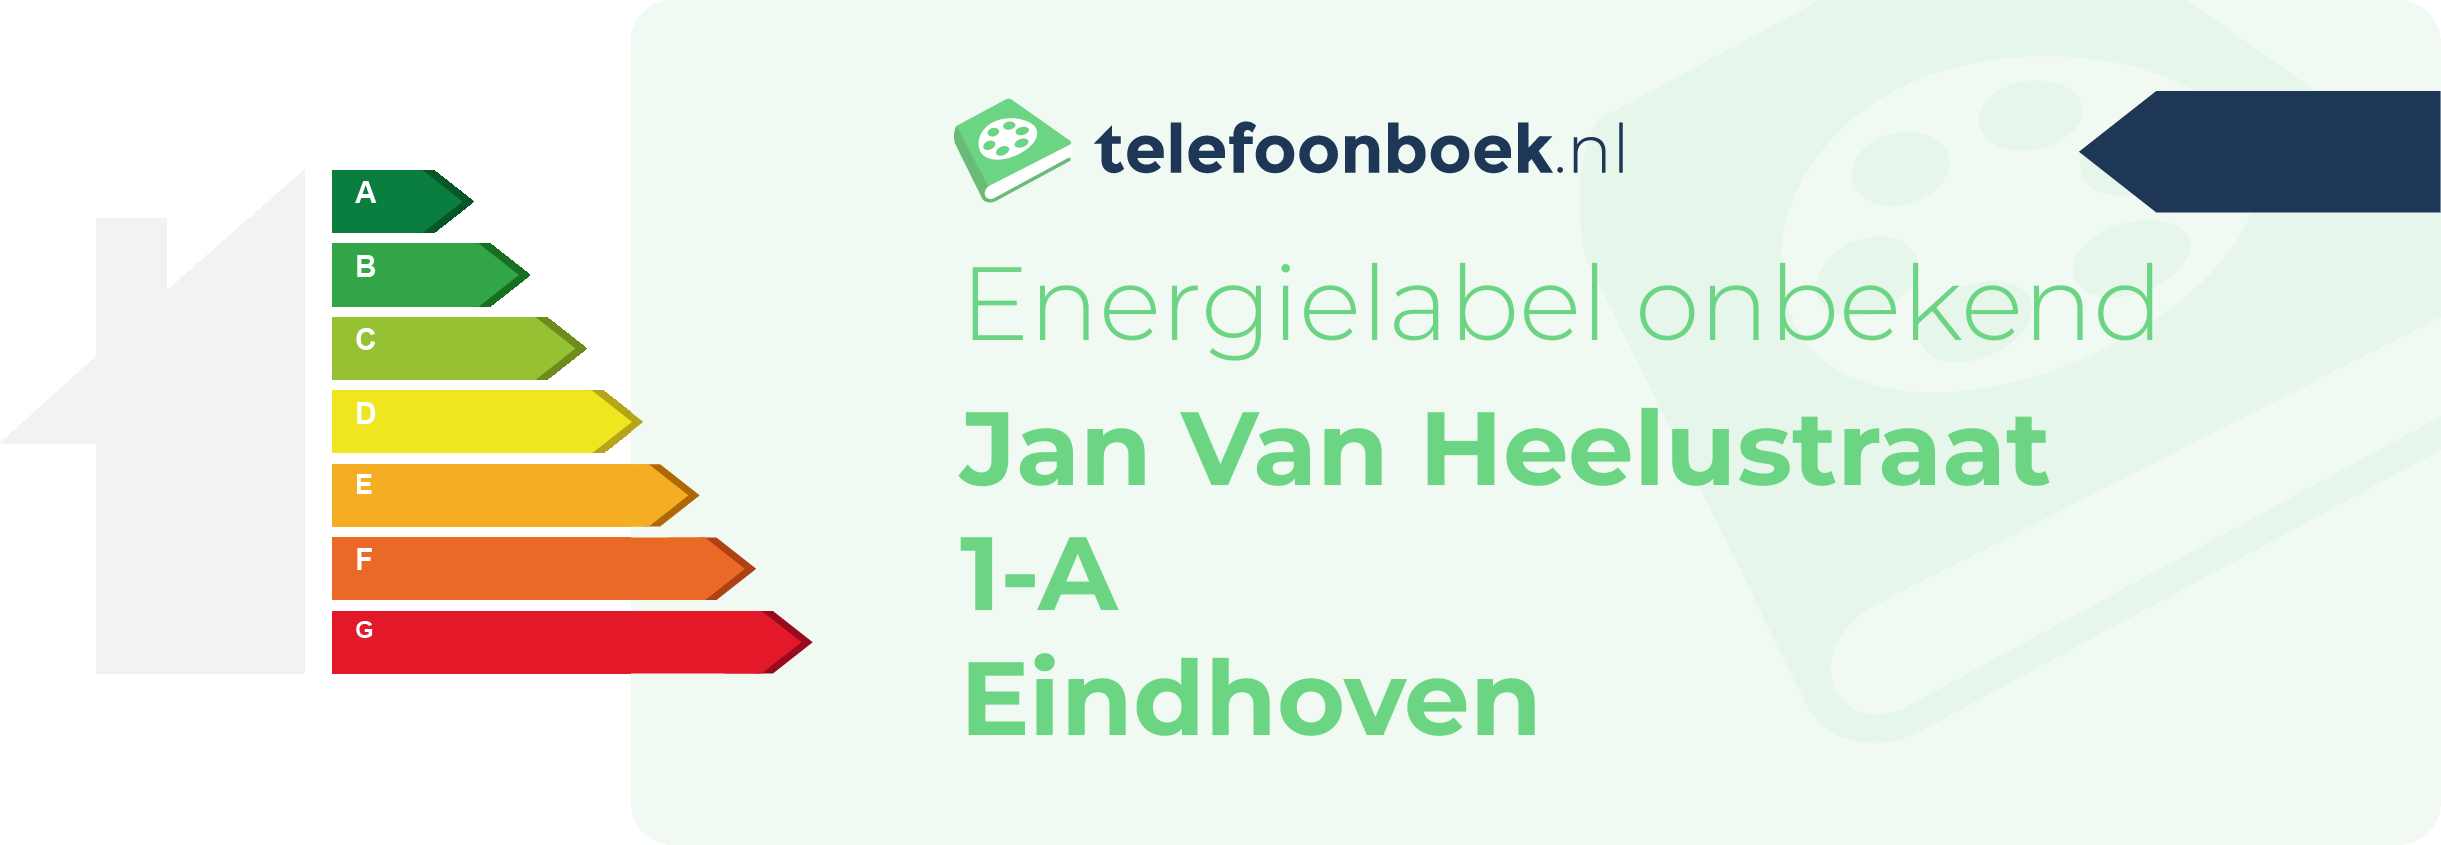 Energielabel Jan Van Heelustraat 1-A Eindhoven